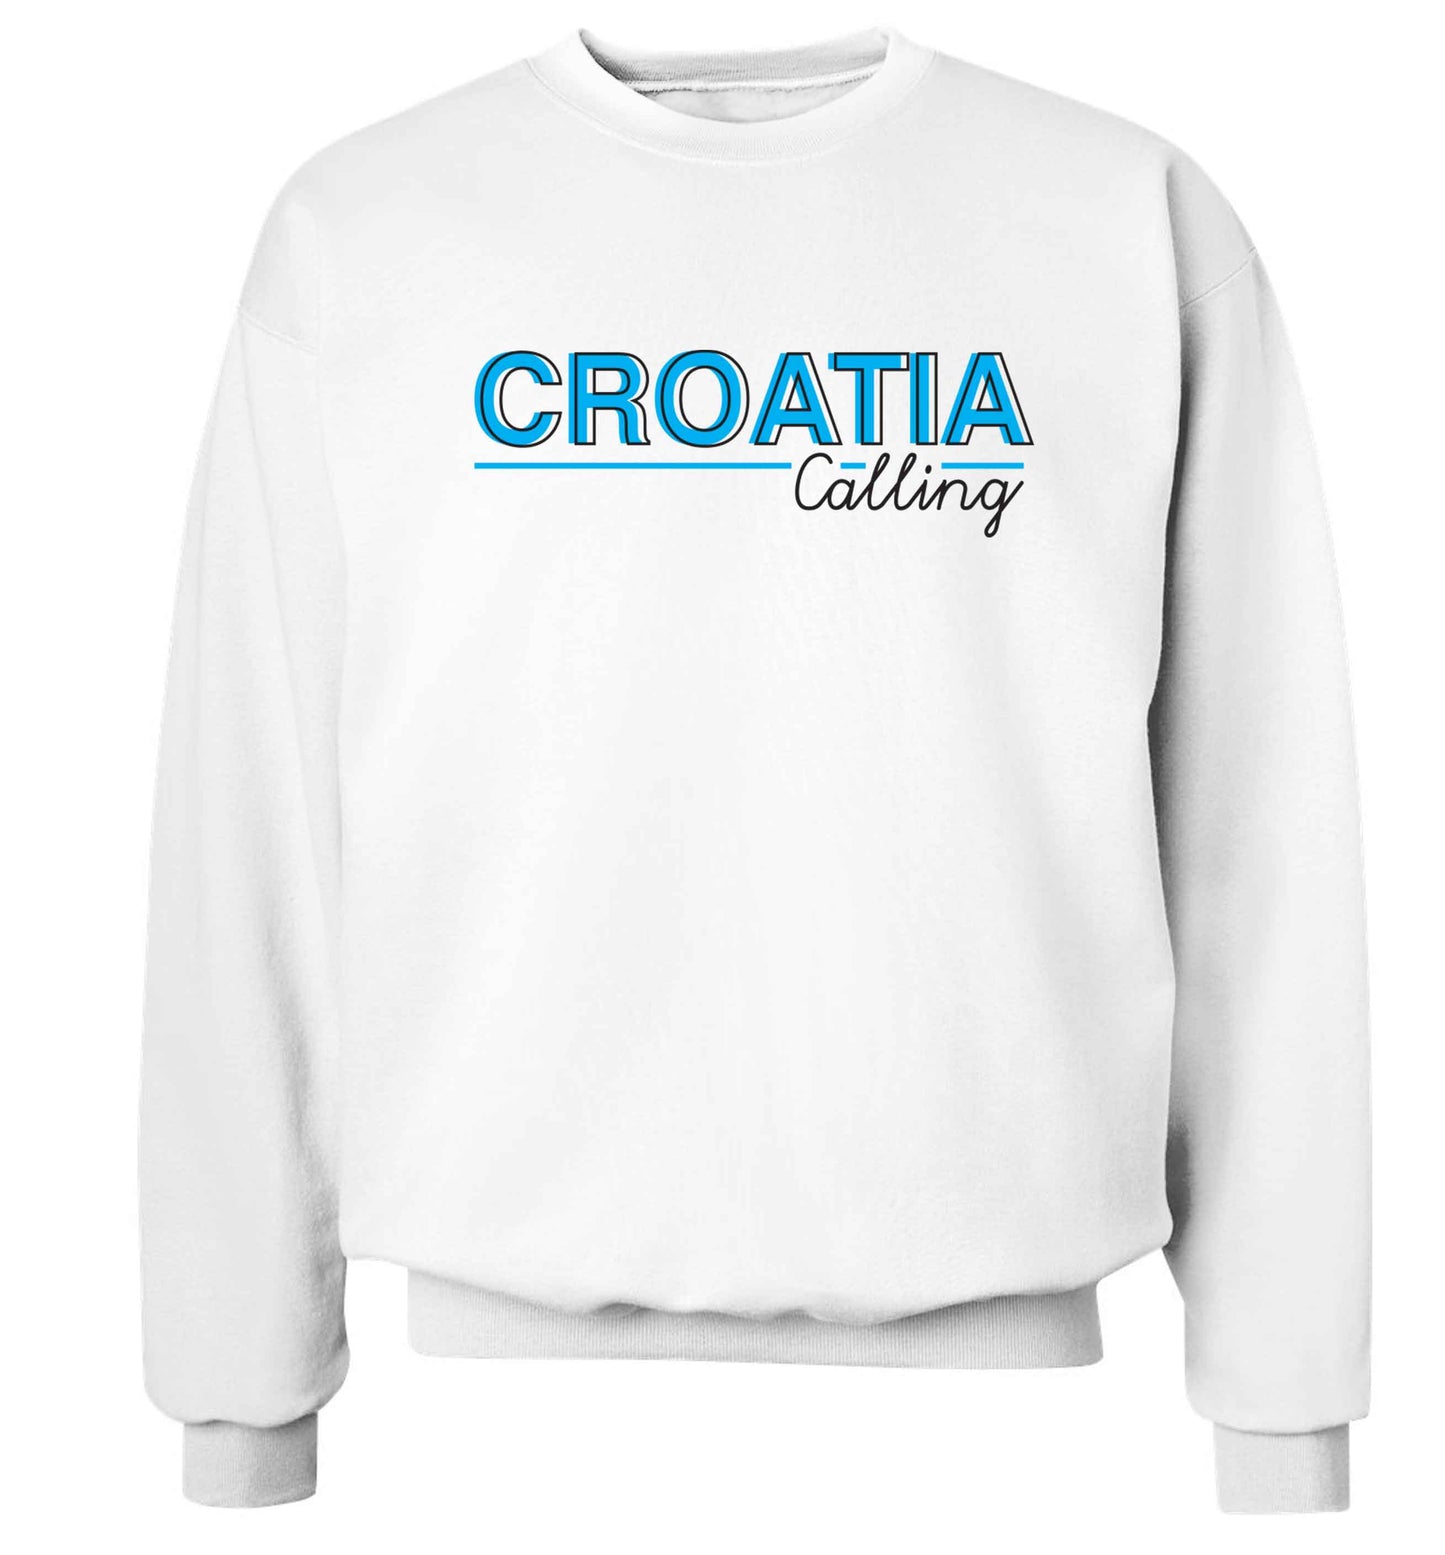 Croatia calling Adult's unisex white Sweater 2XL